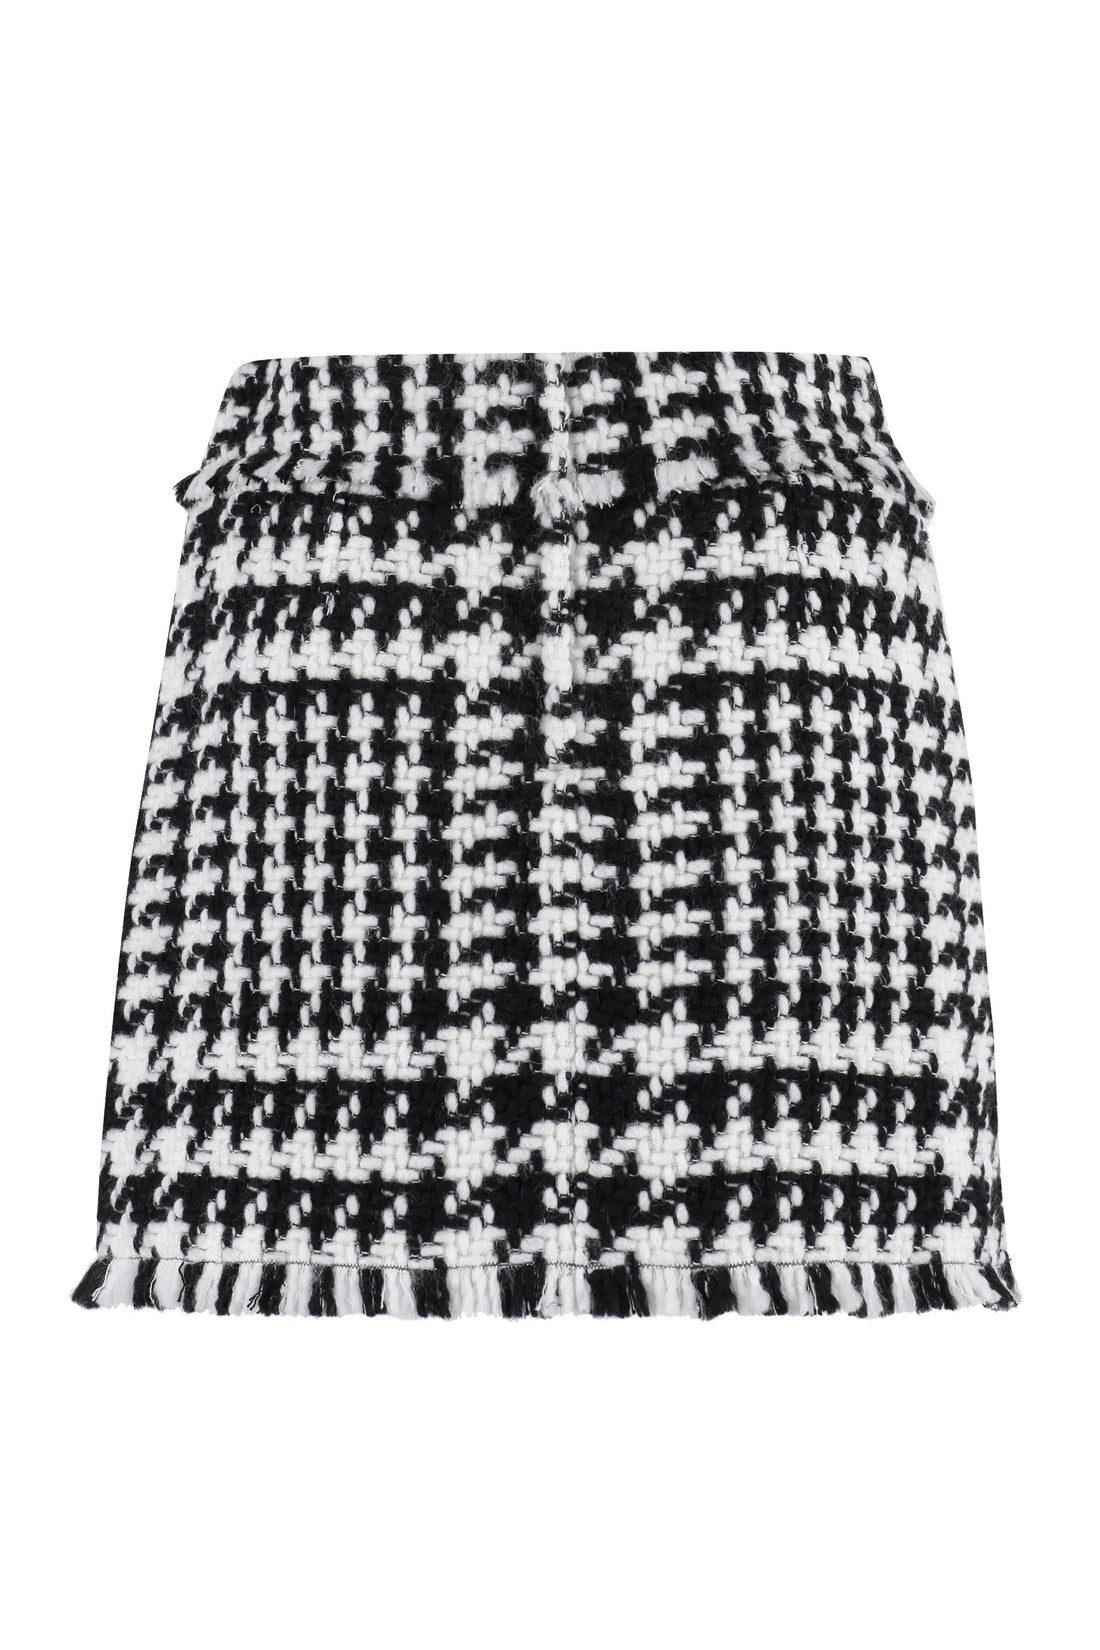 Dolce & Gabbana-OUTLET-SALE-Houndstooth mini skirt-ARCHIVIST